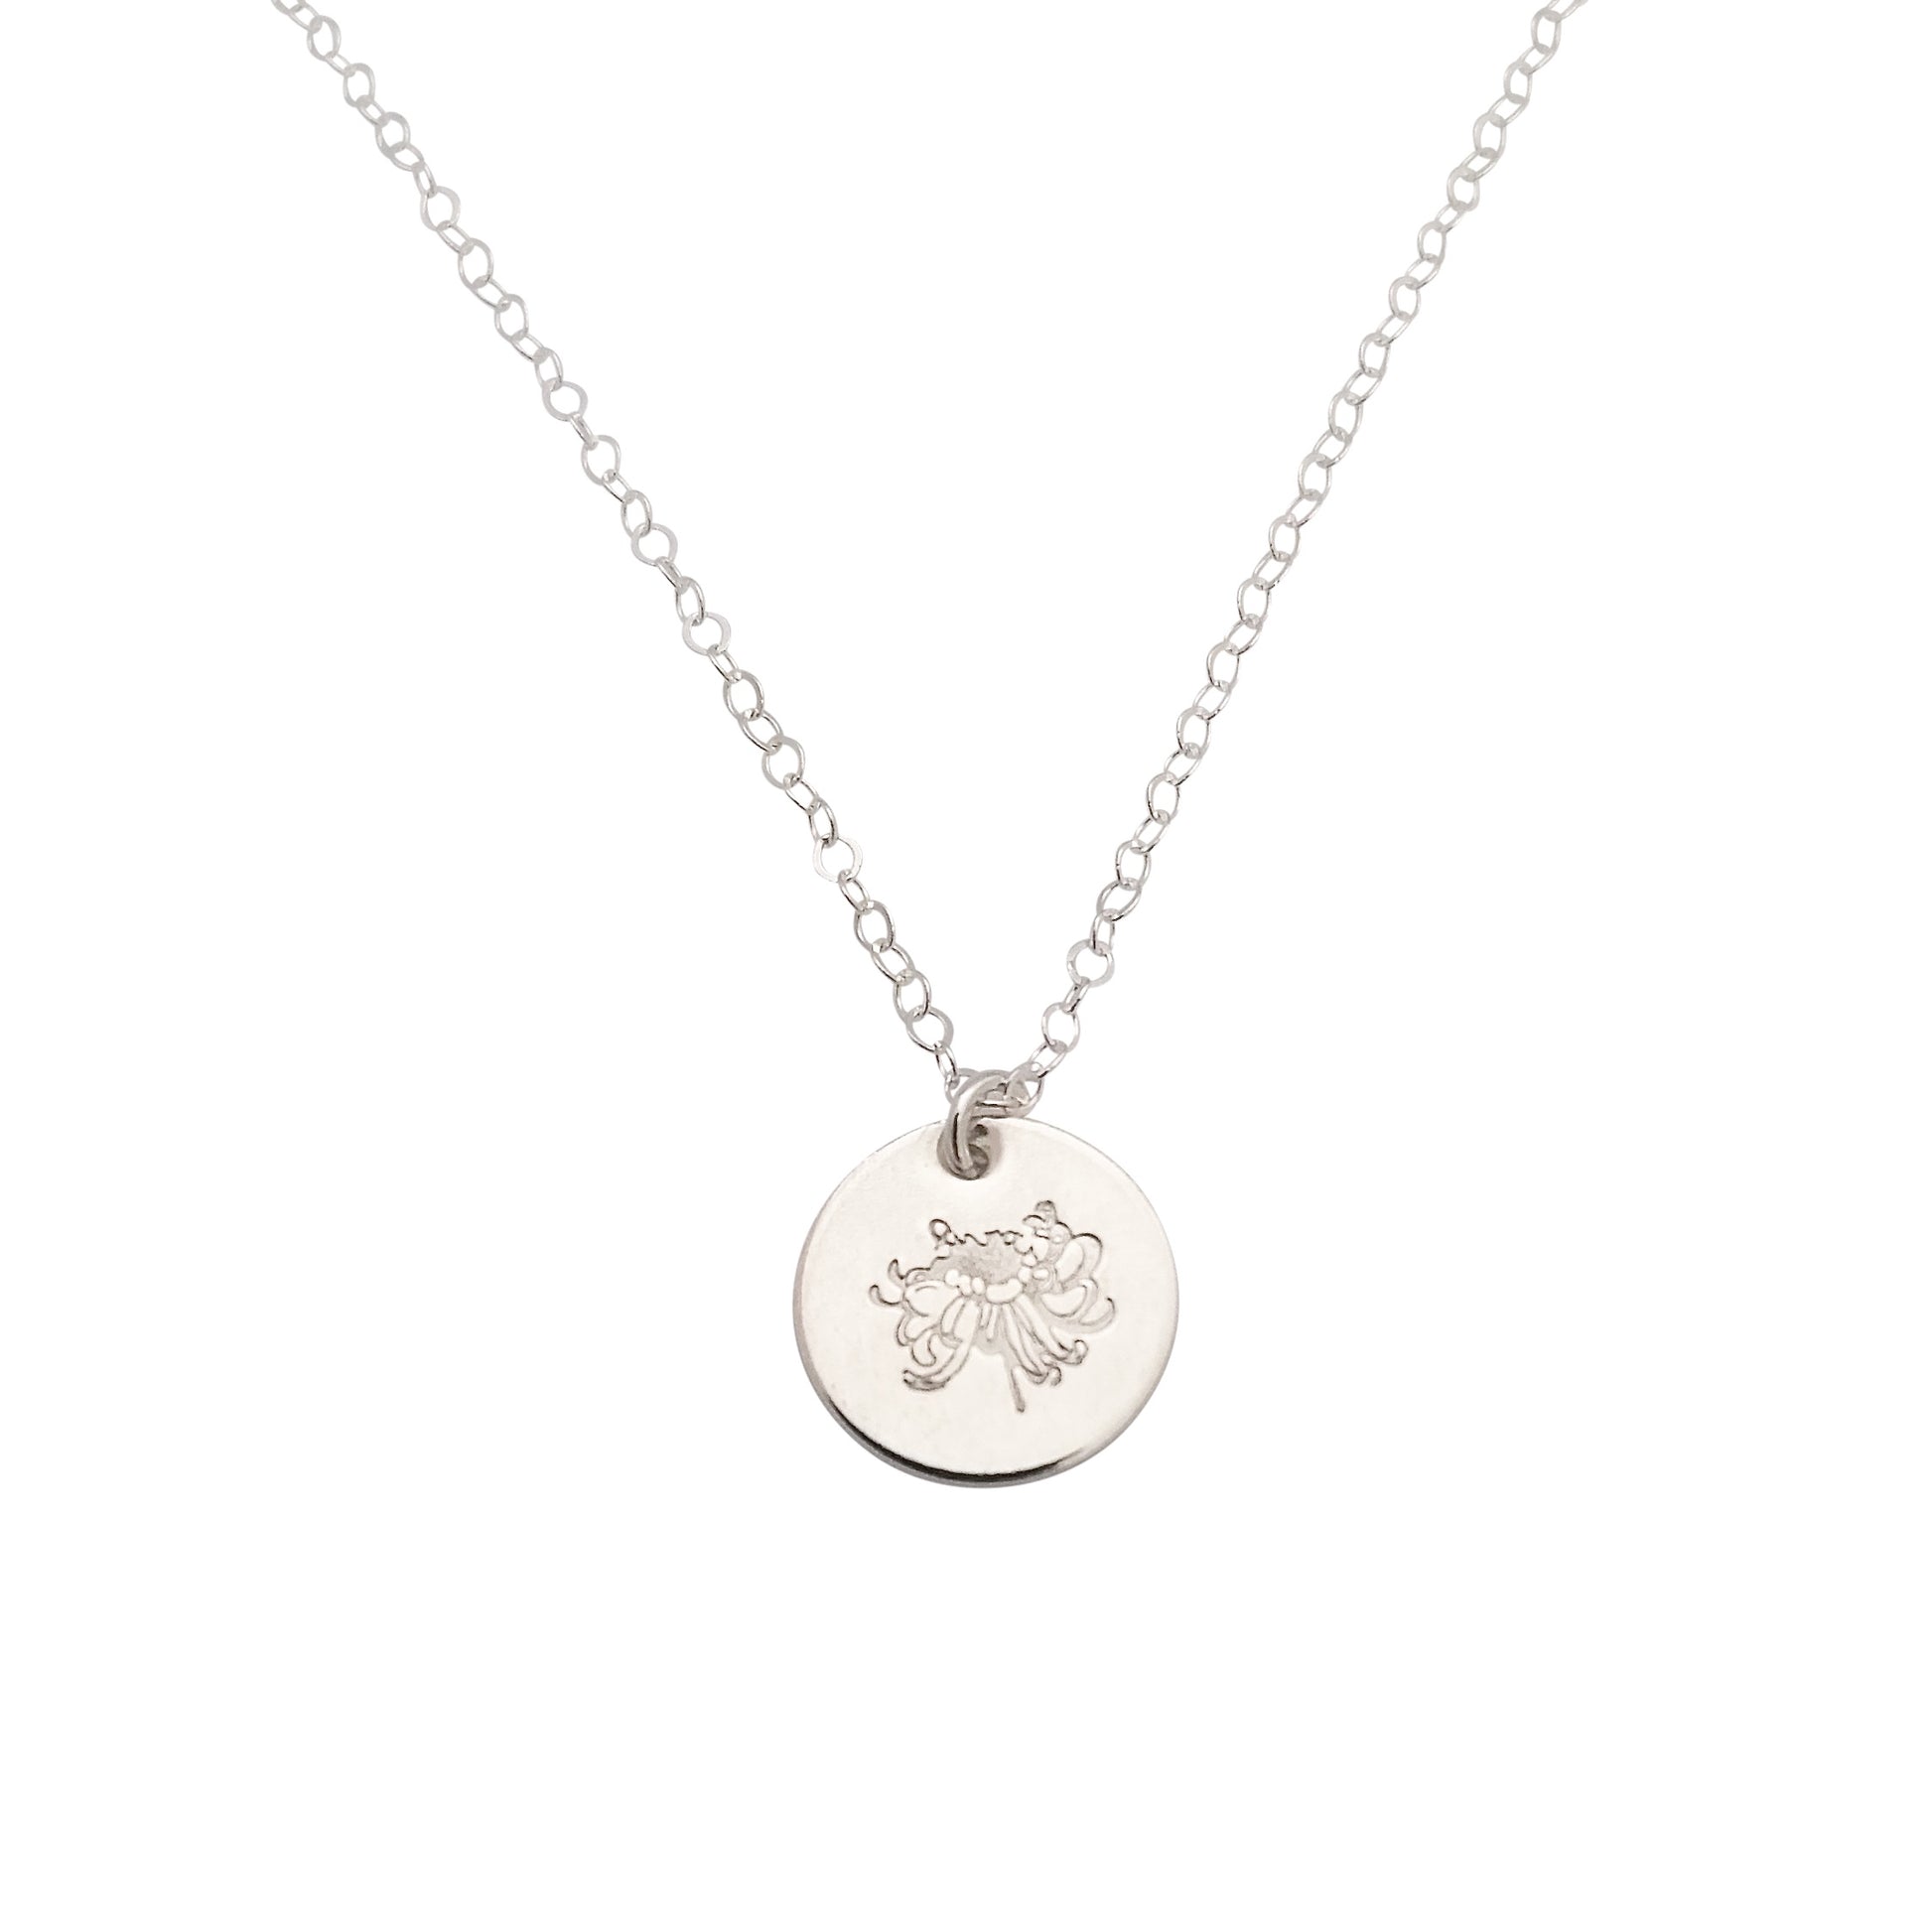 Silver Birth Flower necklace